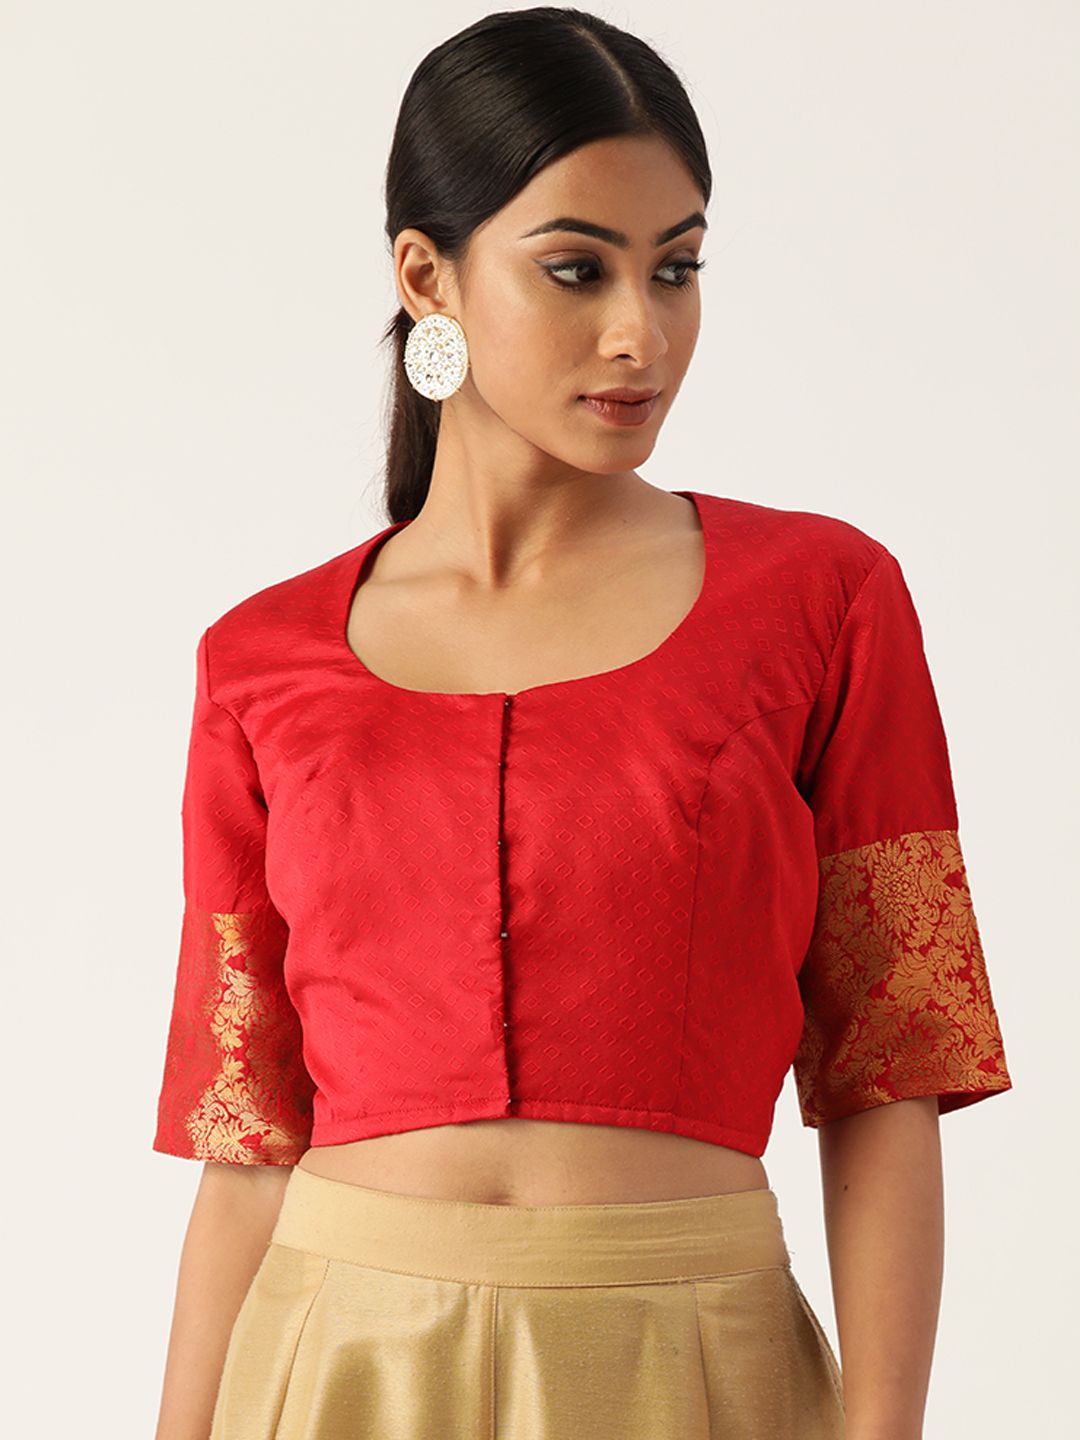 Studio Shringaar Women Red & Golden Self Design Saree Blouse Price in India